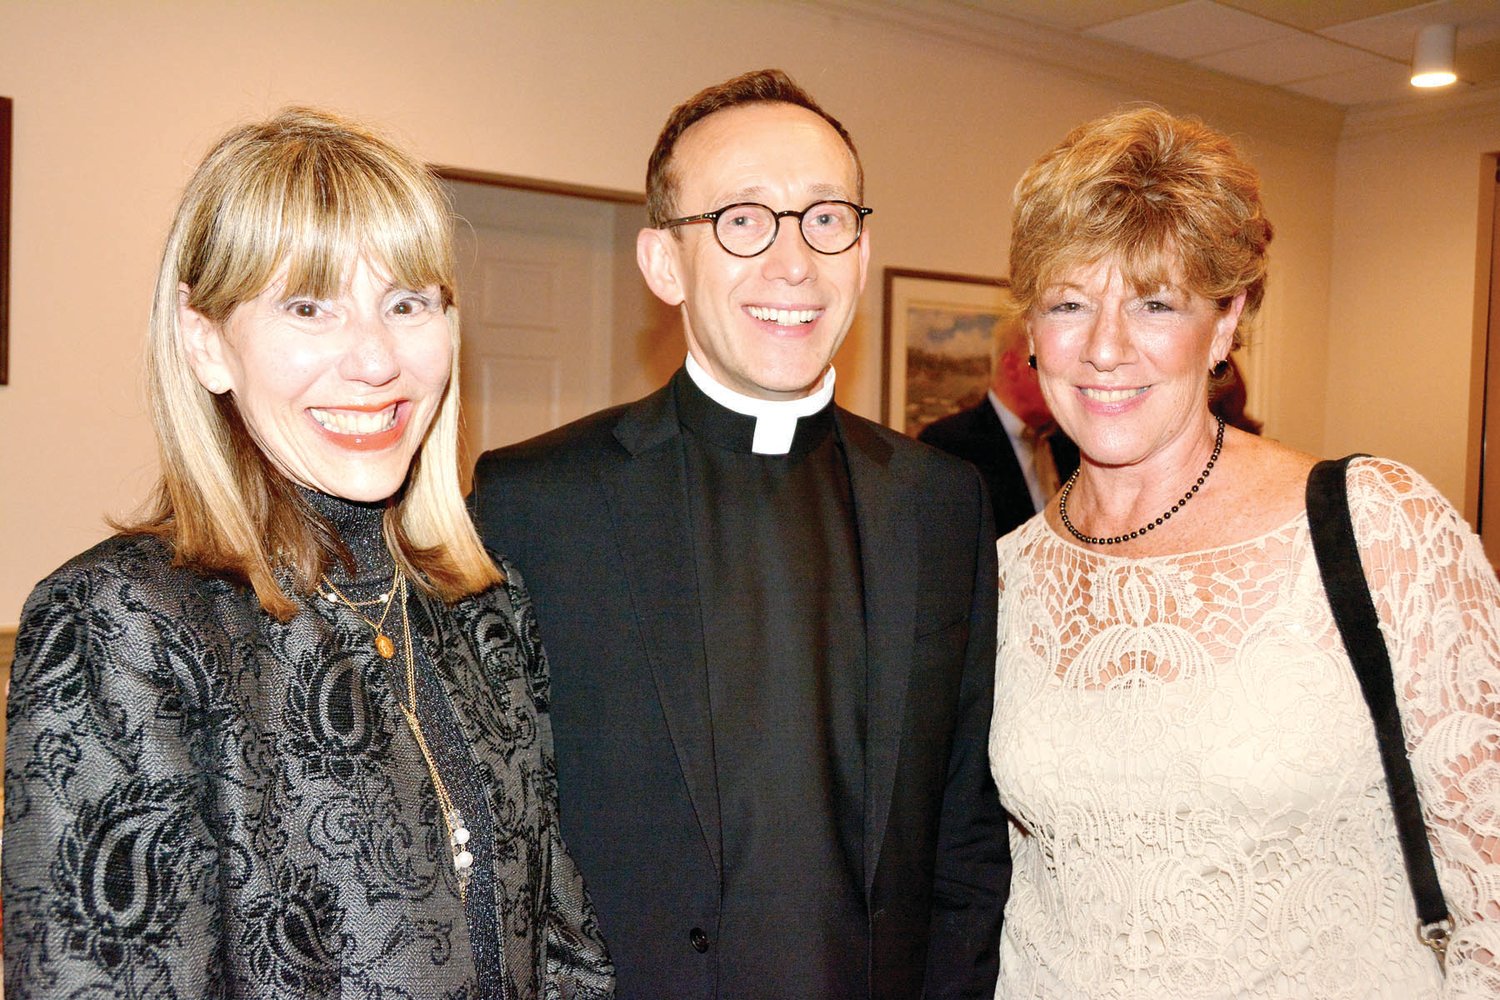 Grace Sconzo, the Rev. Robert Kolakowski and Jennifer St. Marie. Photograph by Annette Eubank